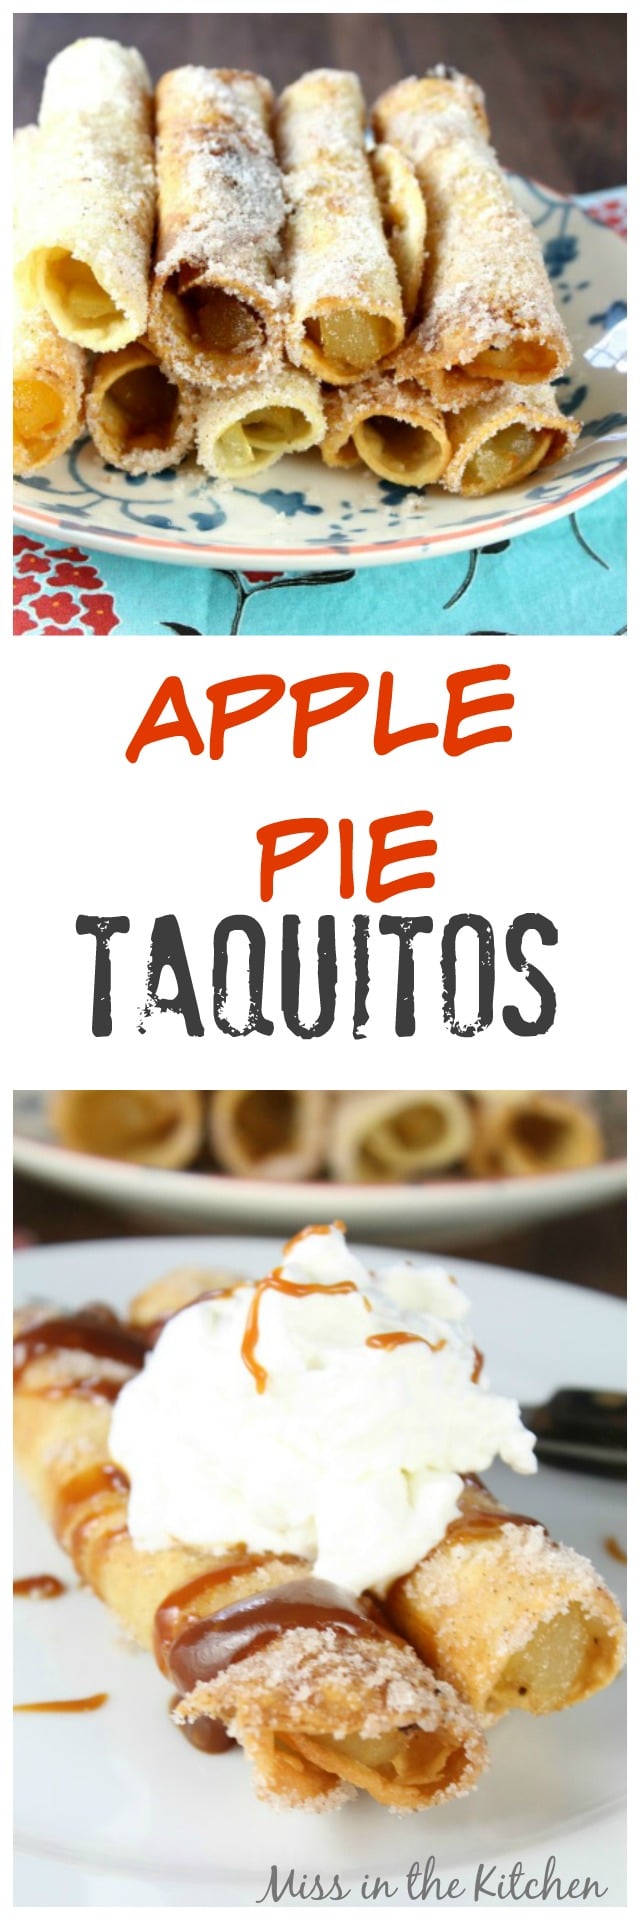 Apple Pie Taquitos Recipe from MissintheKitchen.com